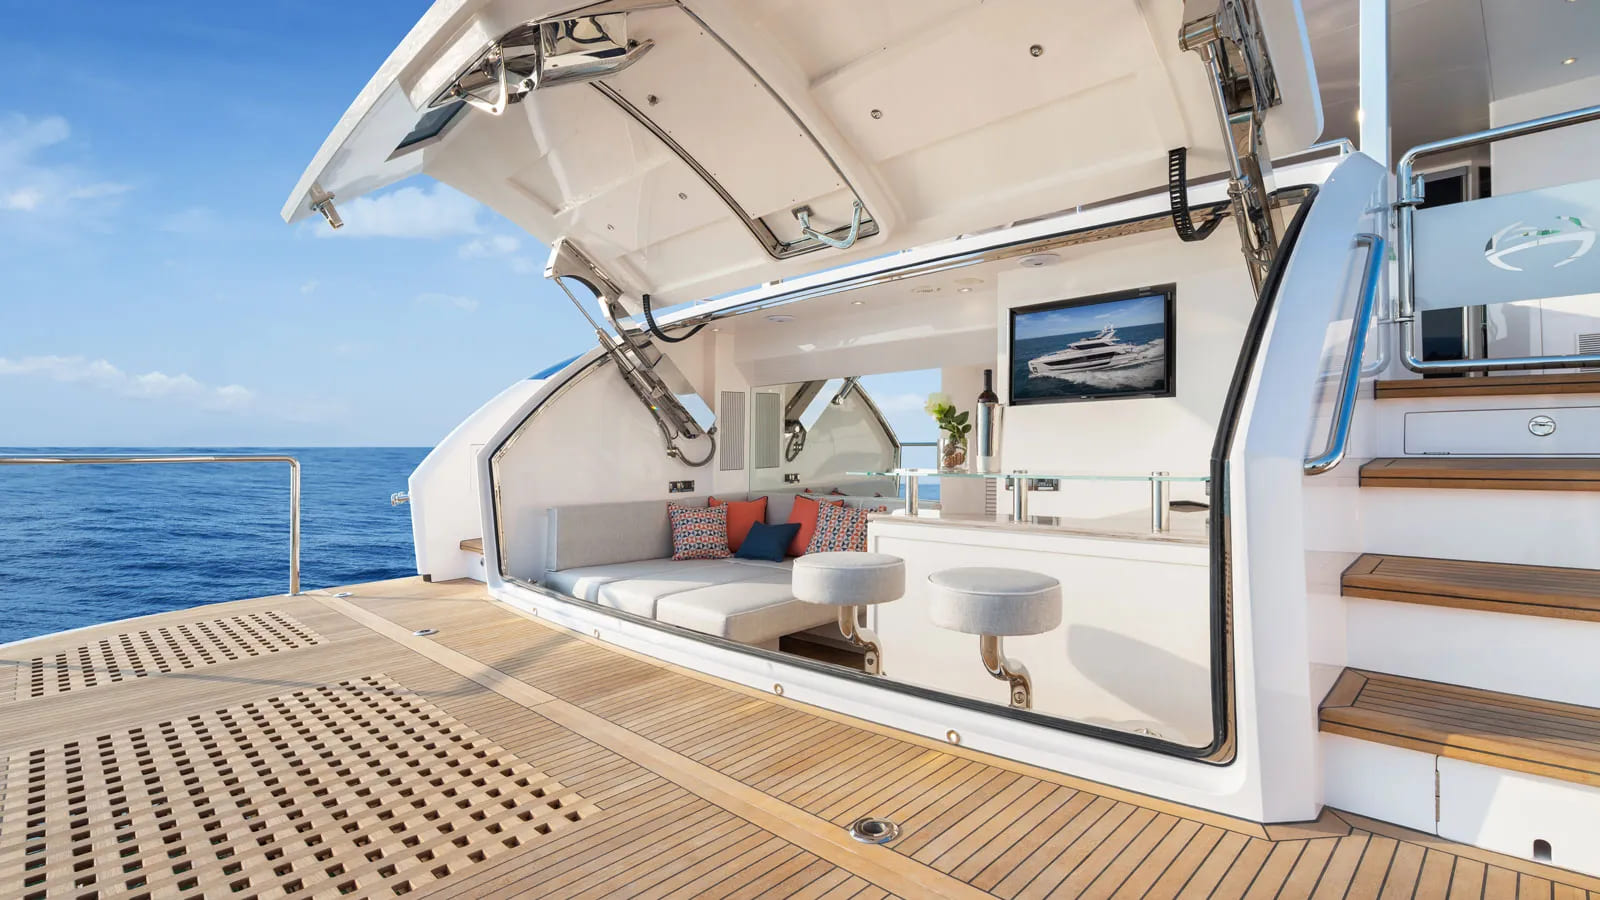 Tri-Deck FD92 yacht Horizon - boat shopping